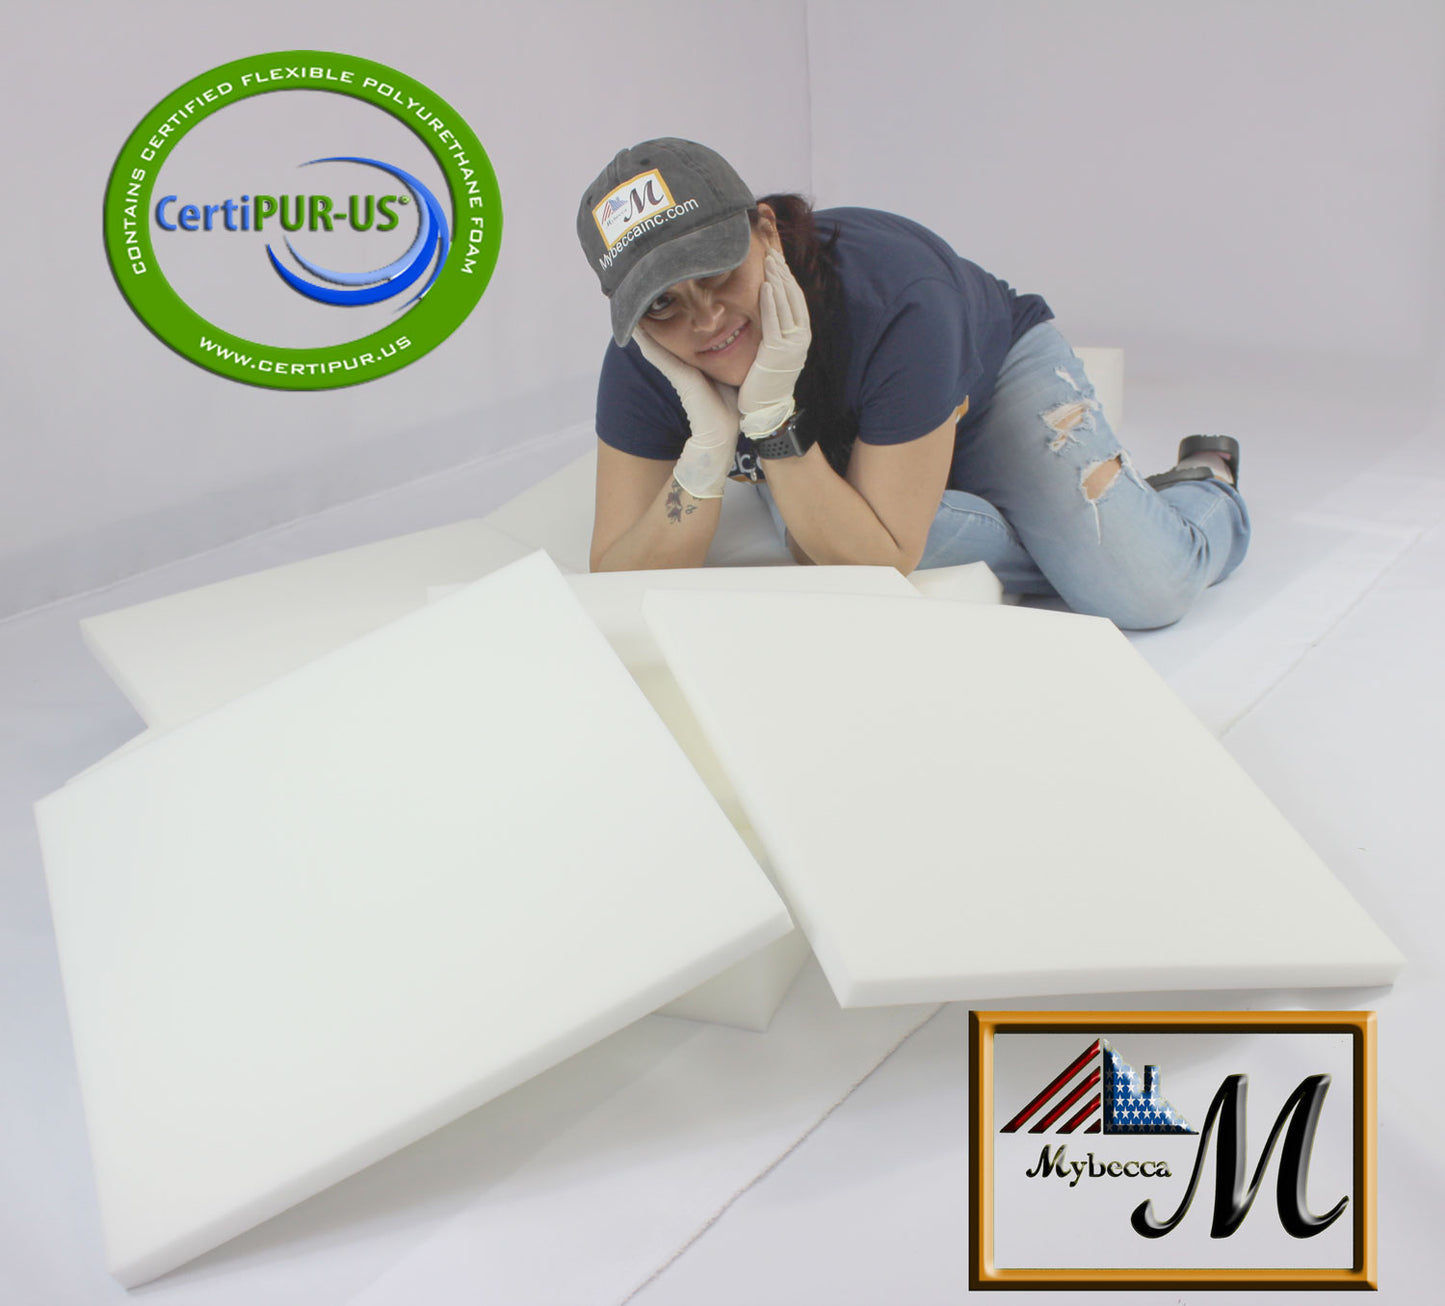 High Density Upholstery Foam Sheet (4 x 30 x 72)